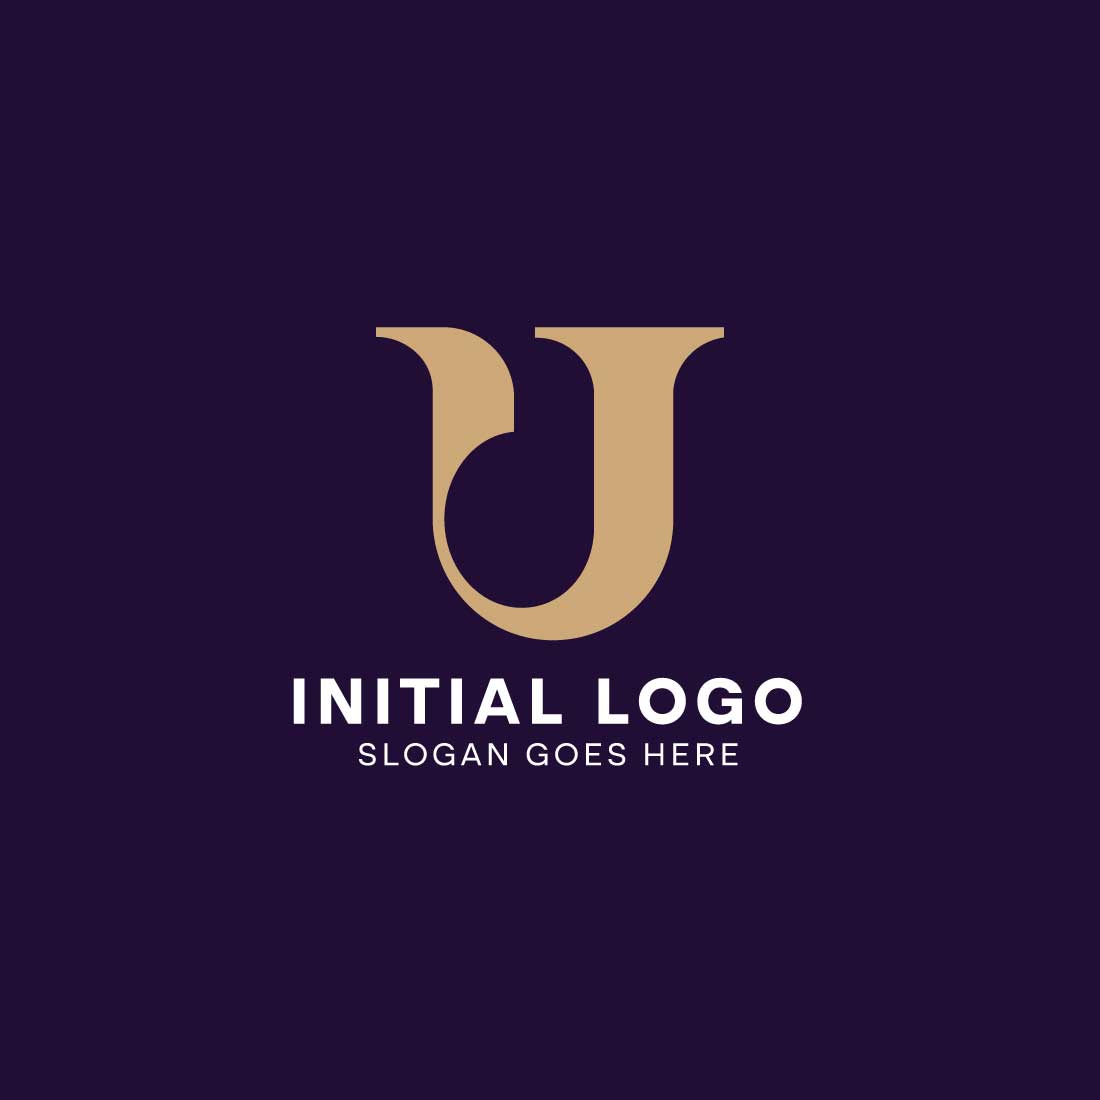 Creative UJ JU Letter Logo design preview image.